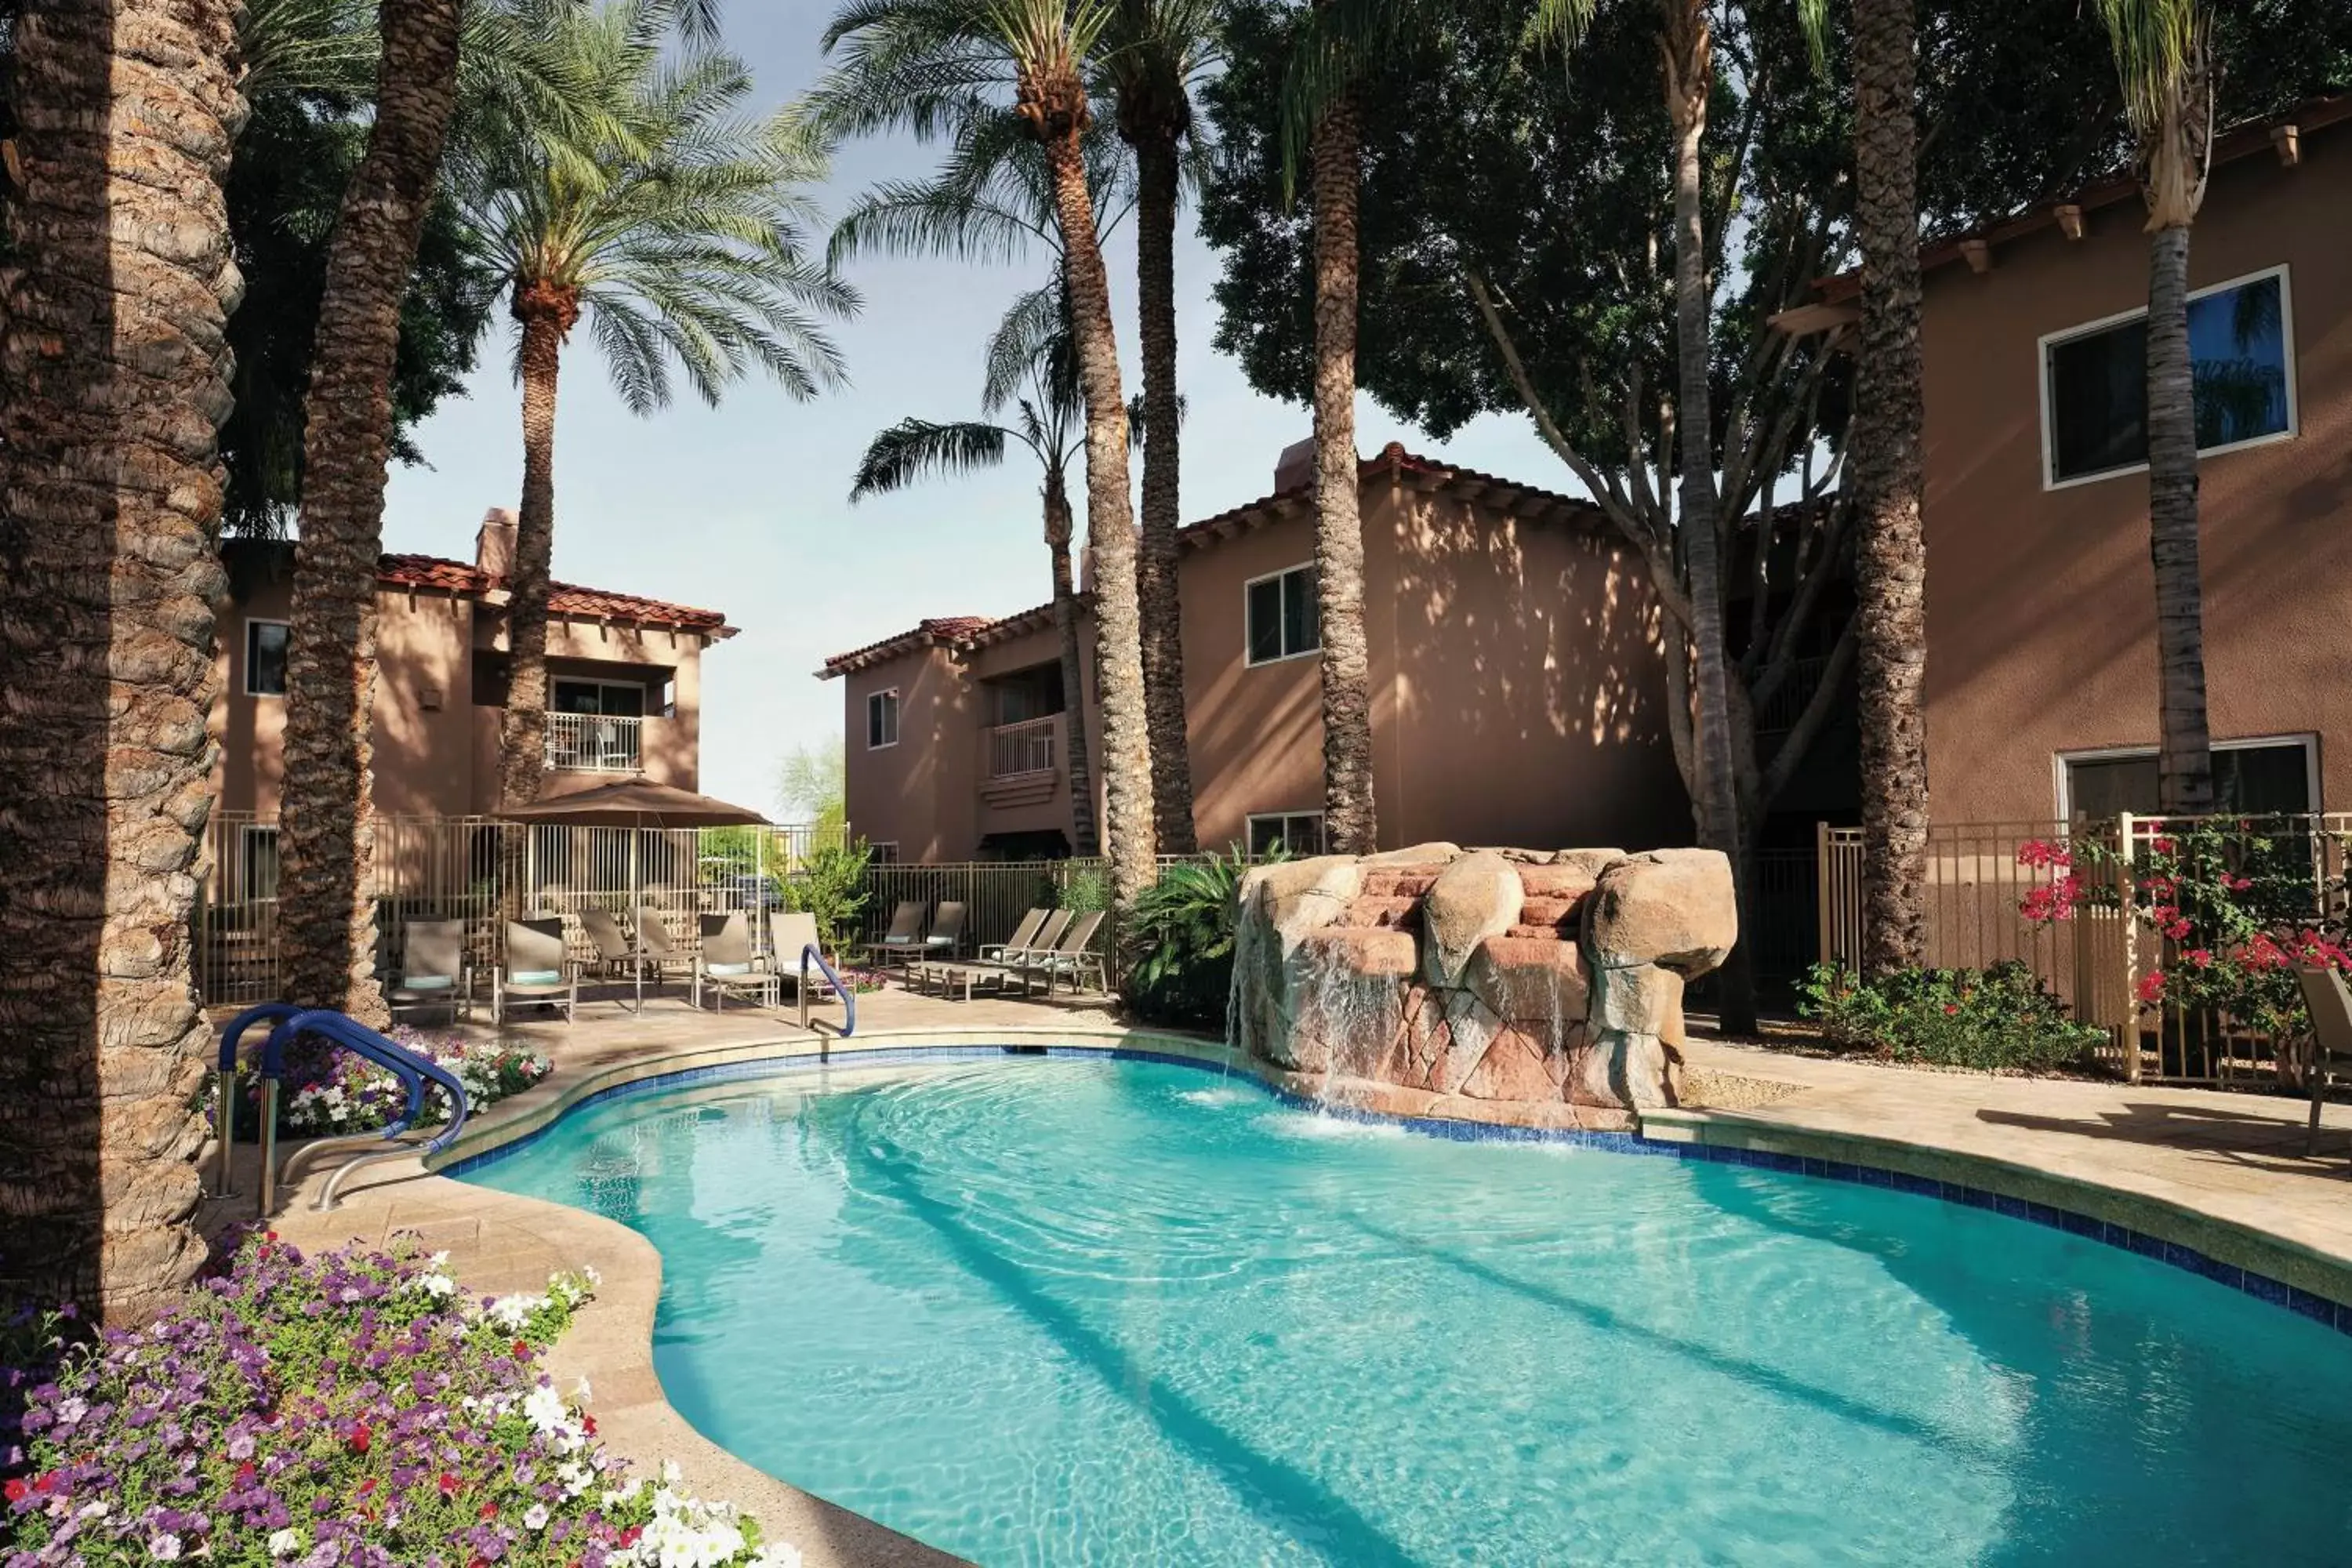 Swimming Pool in Sheraton Desert Oasis Villas, Scottsdale